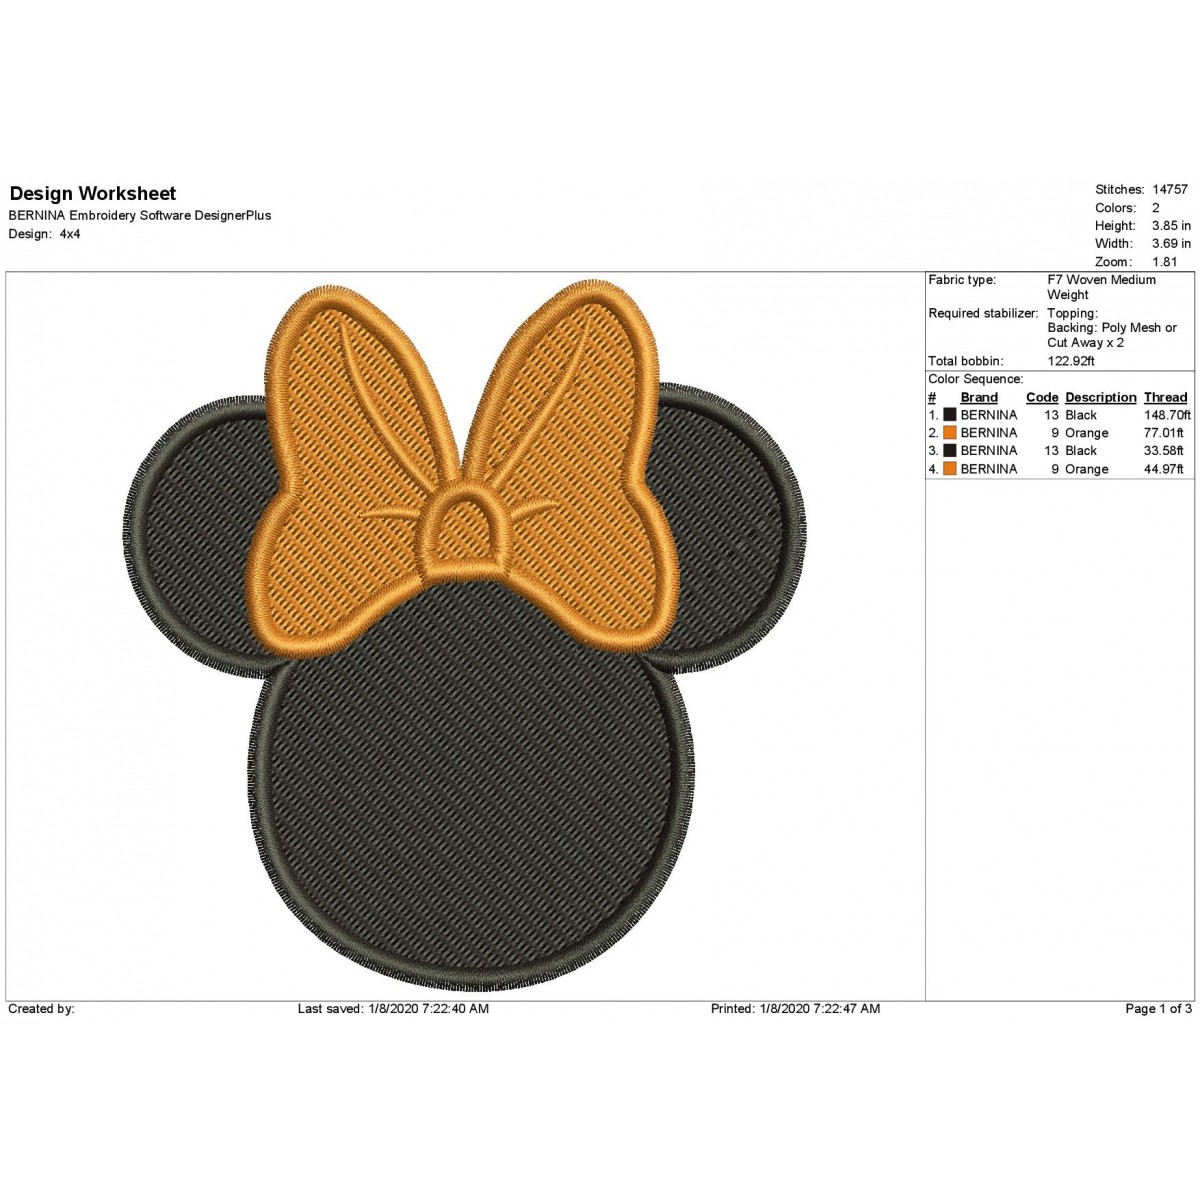 Disney Mickey Mouse Ears Head Applique Embroidery Designs – Blasto Stitch